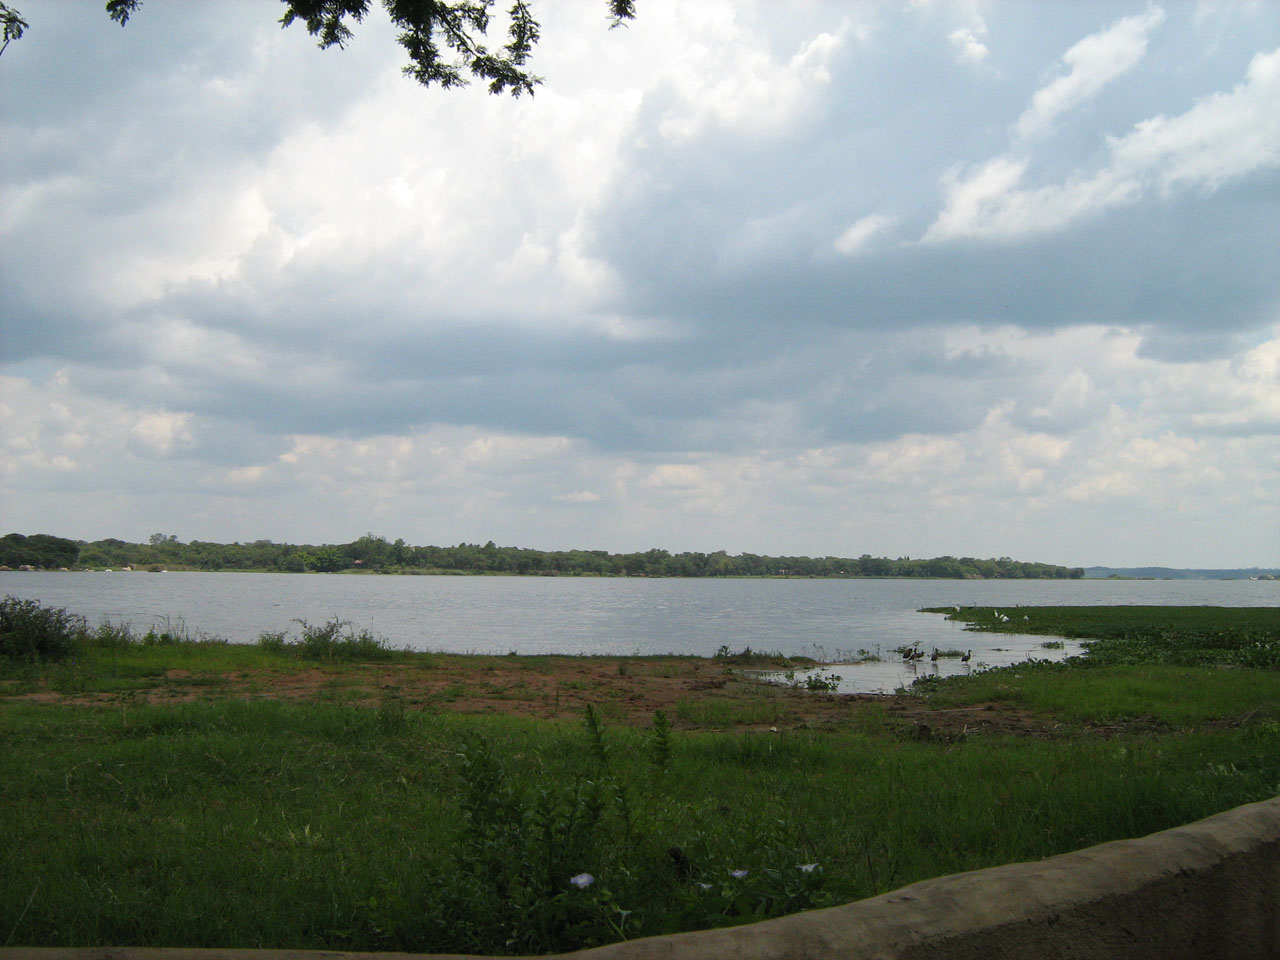 Lake Chivero